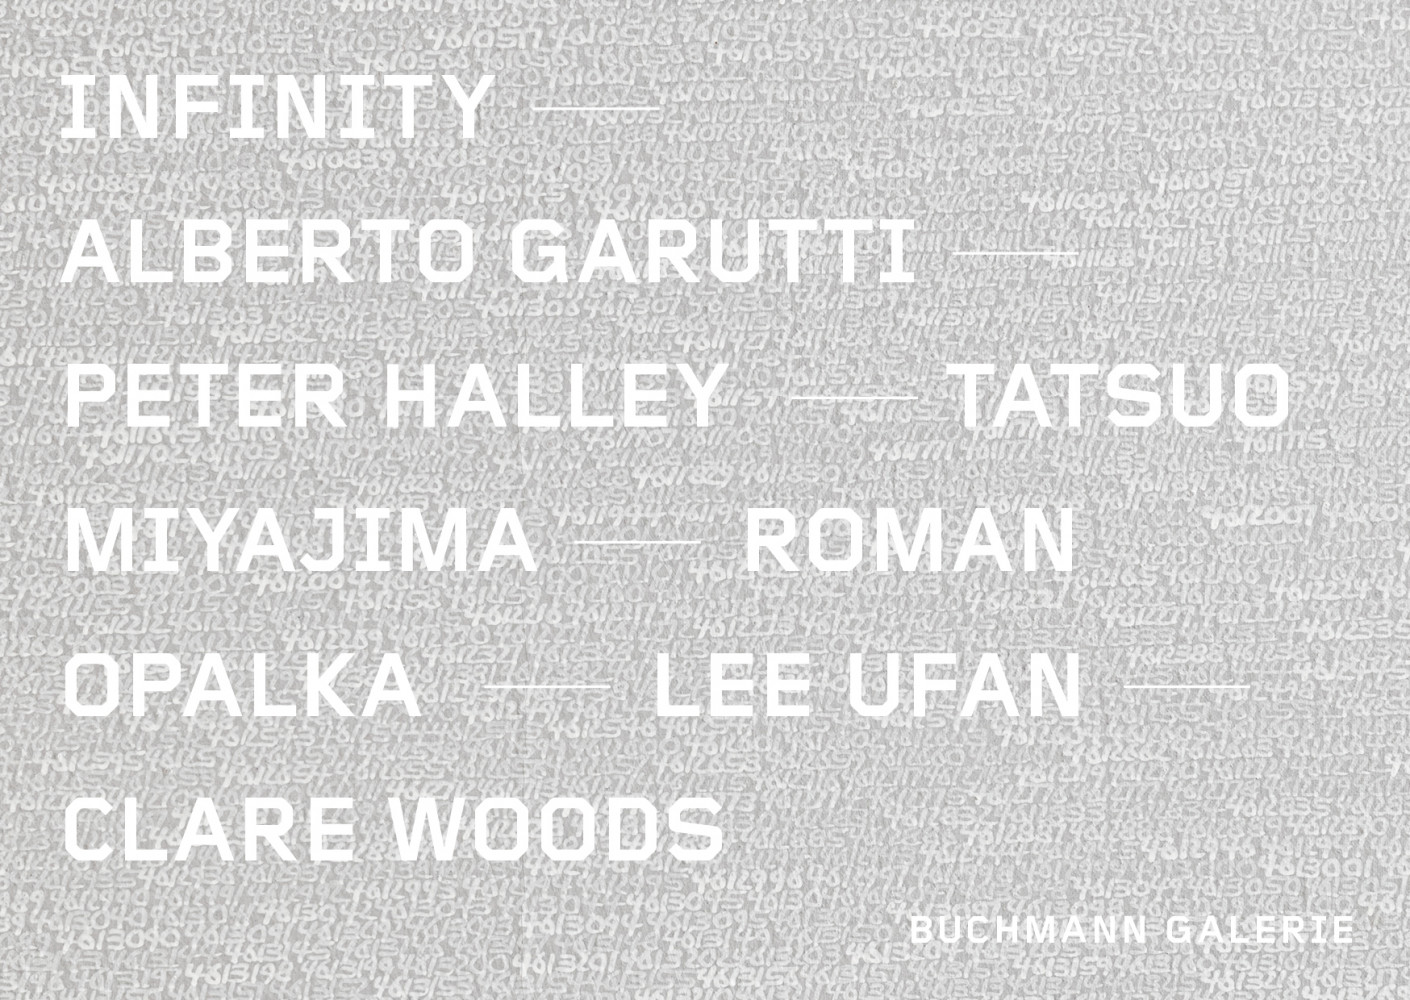 ‘Infinity – Alberto Garutti, Peter Halley, Tatsuo Miyajima, Roman Opalka, Lee Ufan, Clare Woods’